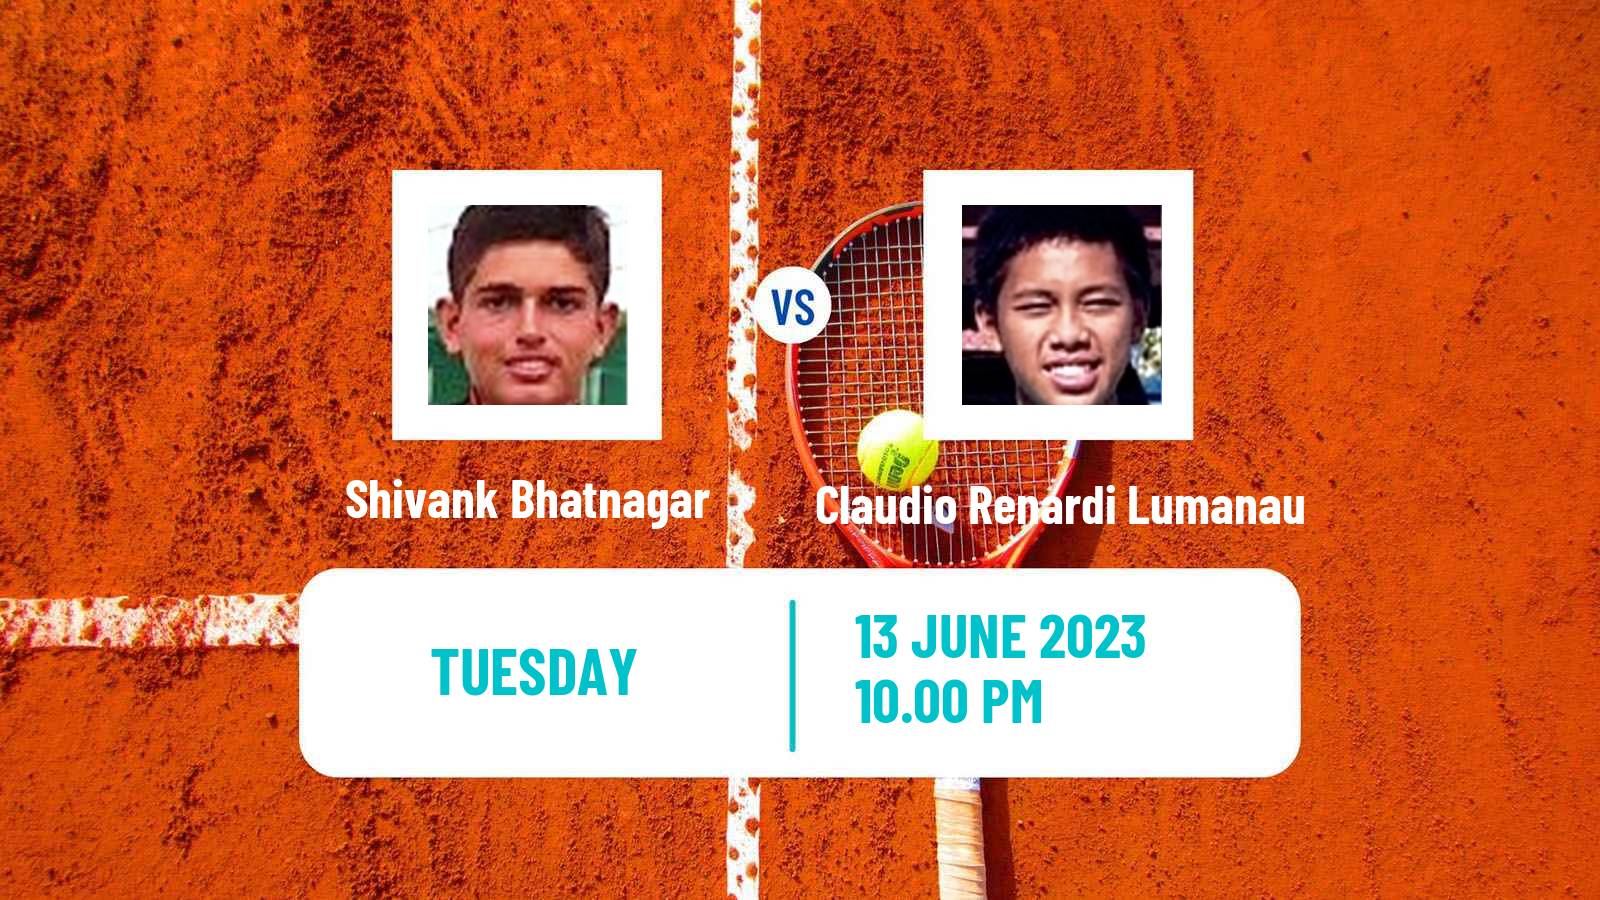 Tennis ITF M15 Jakarta 3 Men Shivank Bhatnagar - Claudio Renardi Lumanau